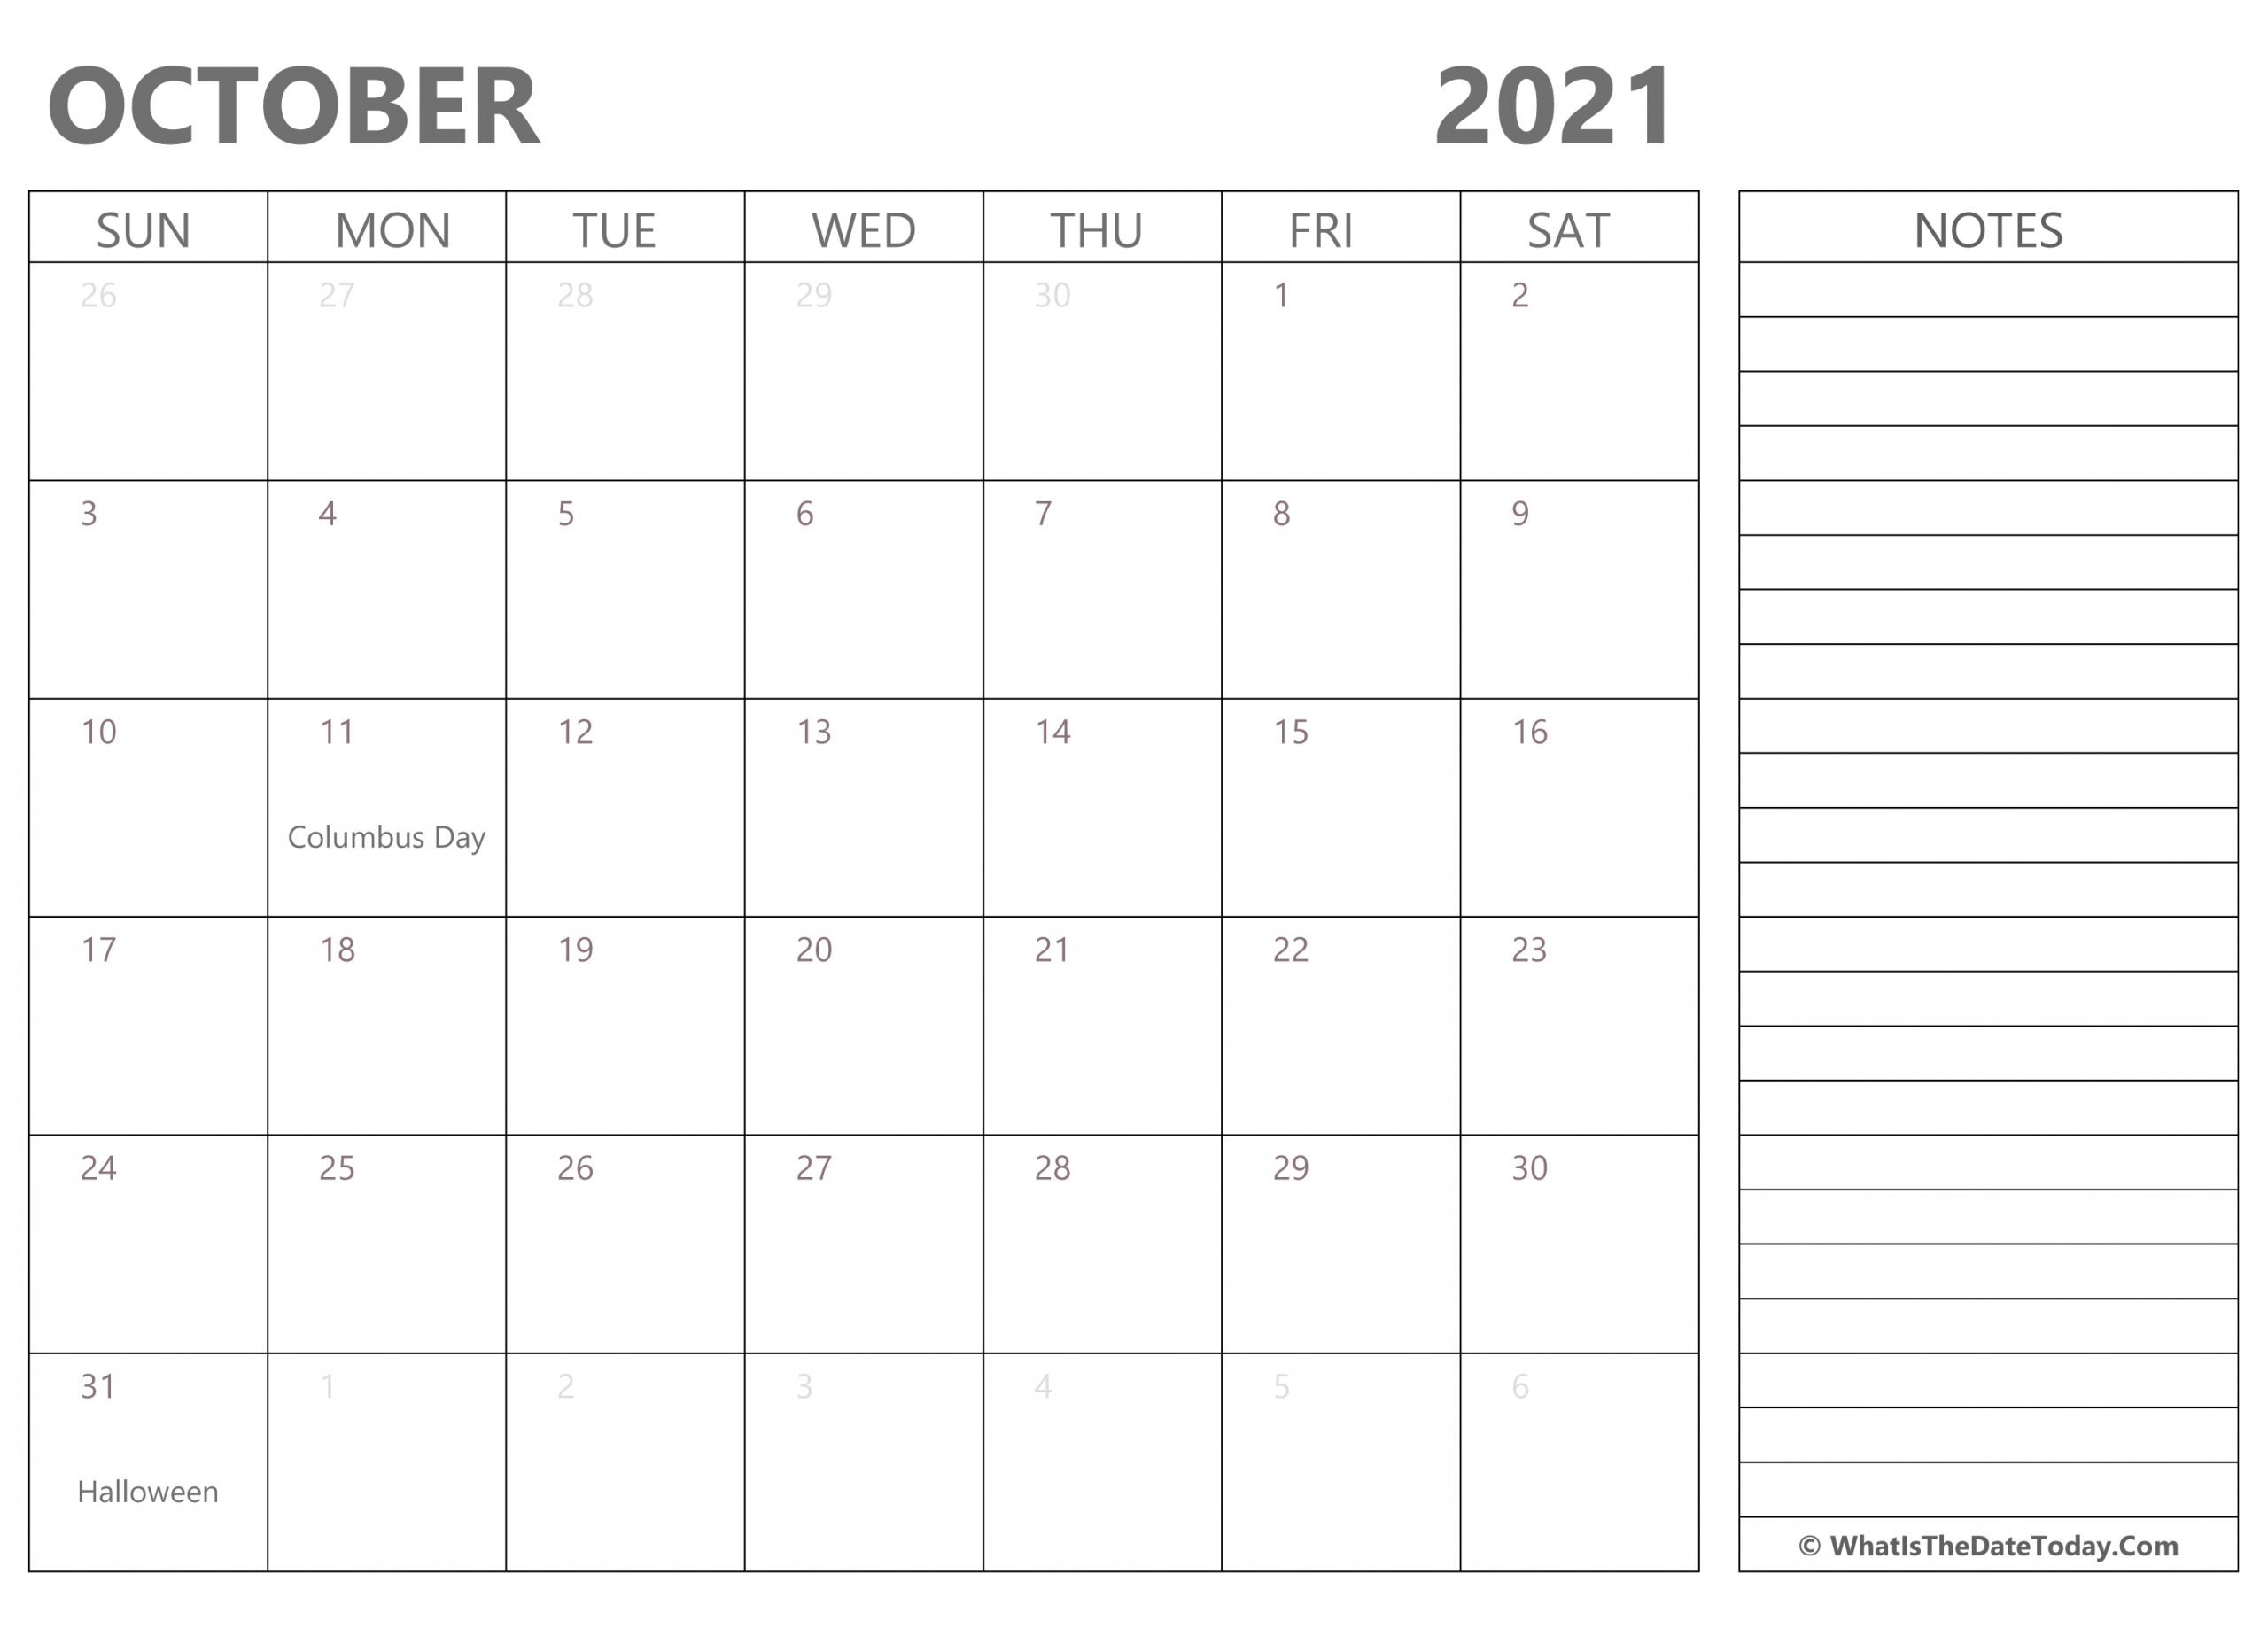 Editable October 2021 Calendar With Holidays And Notes Wiki Calendar November 2021